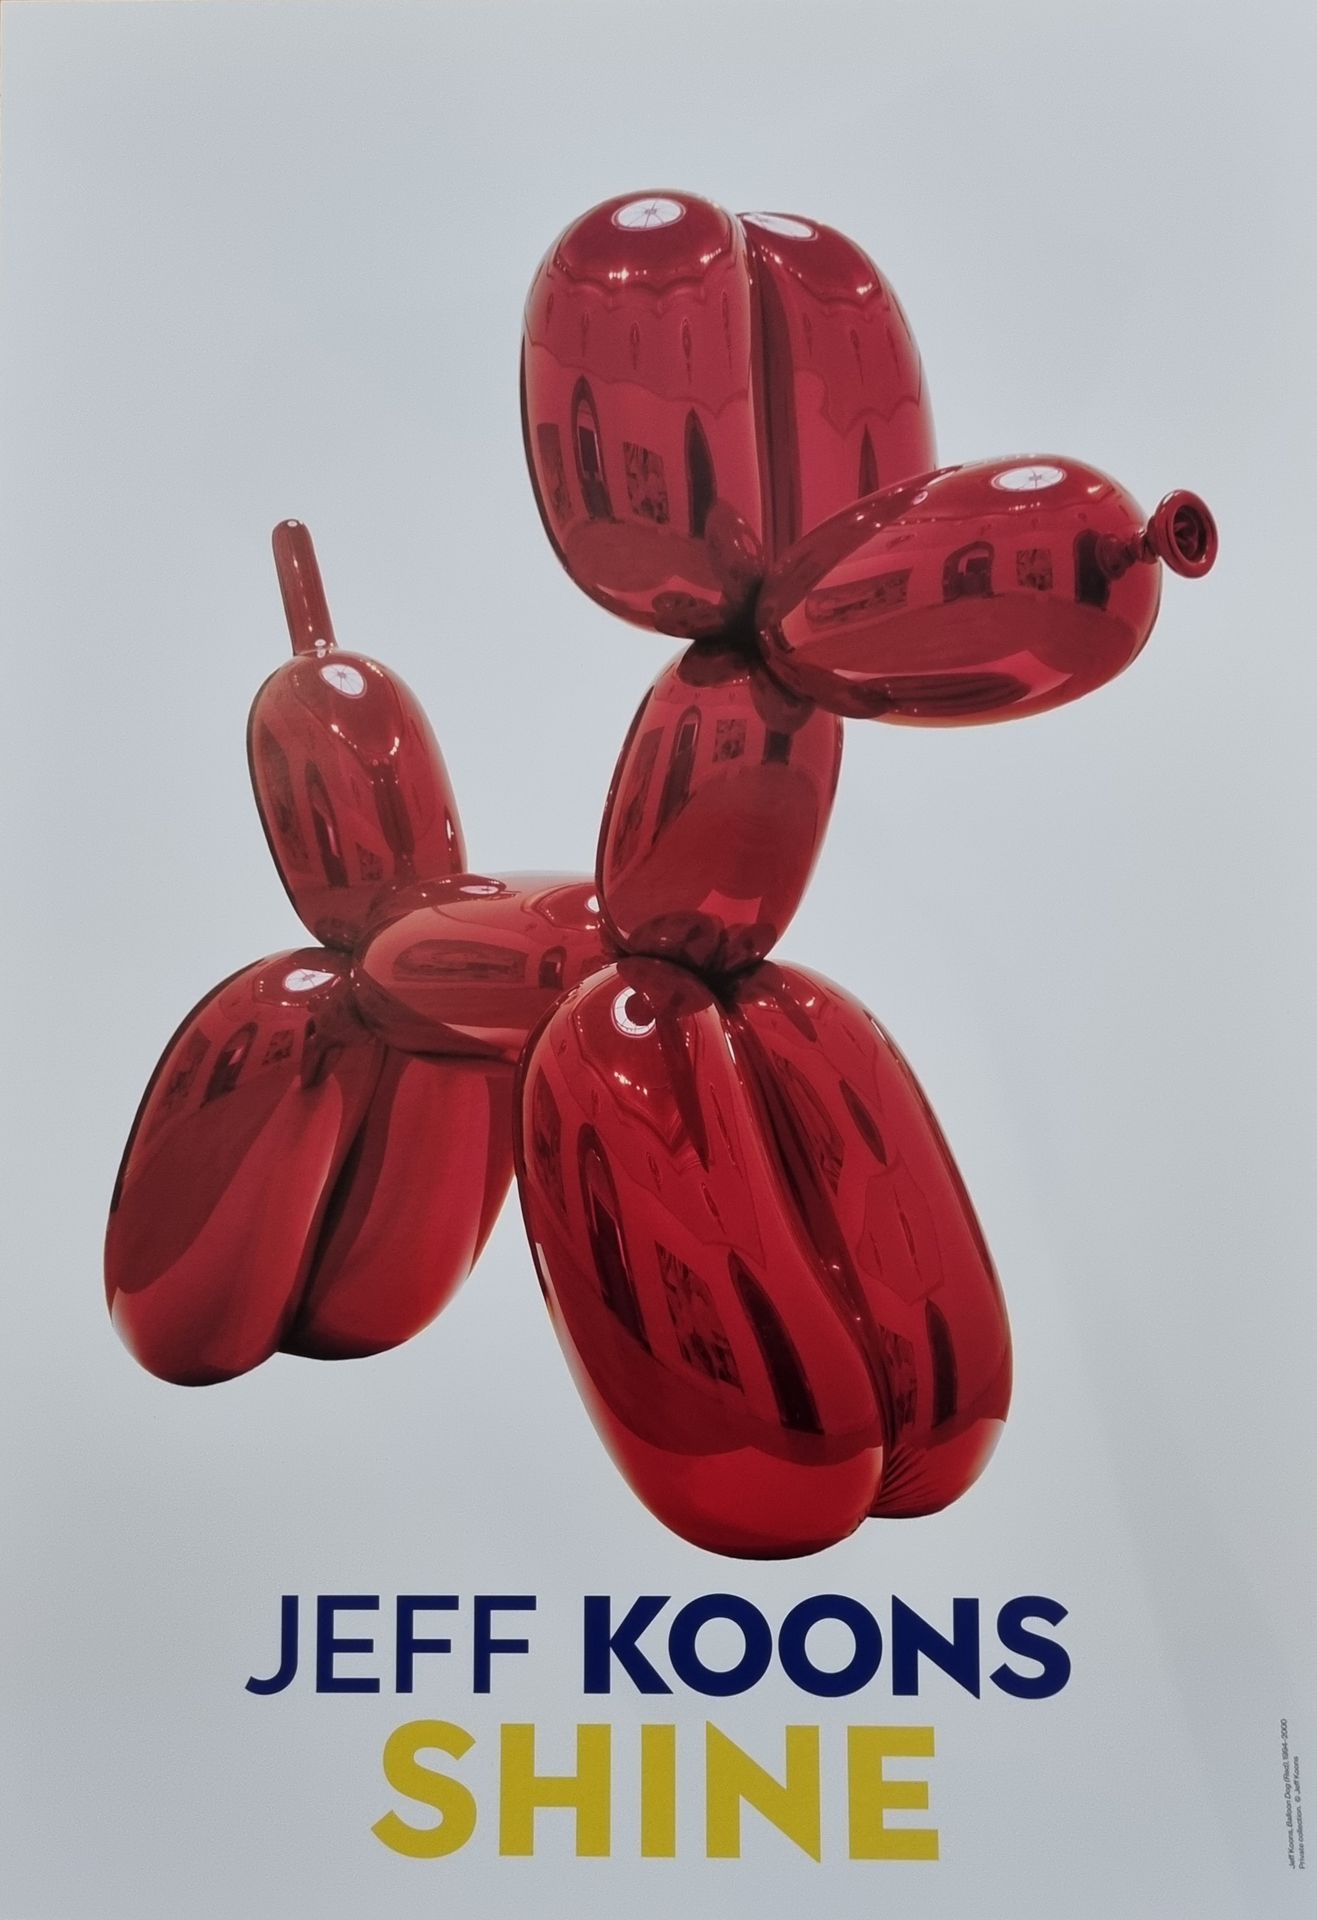 KOONS JEFF (JEFFREY) 昆斯-杰夫(Jeffrey)
美国 1955年

无题
2021

胶印
50,00x35,00
真实性证书
艺术家S&hellip;